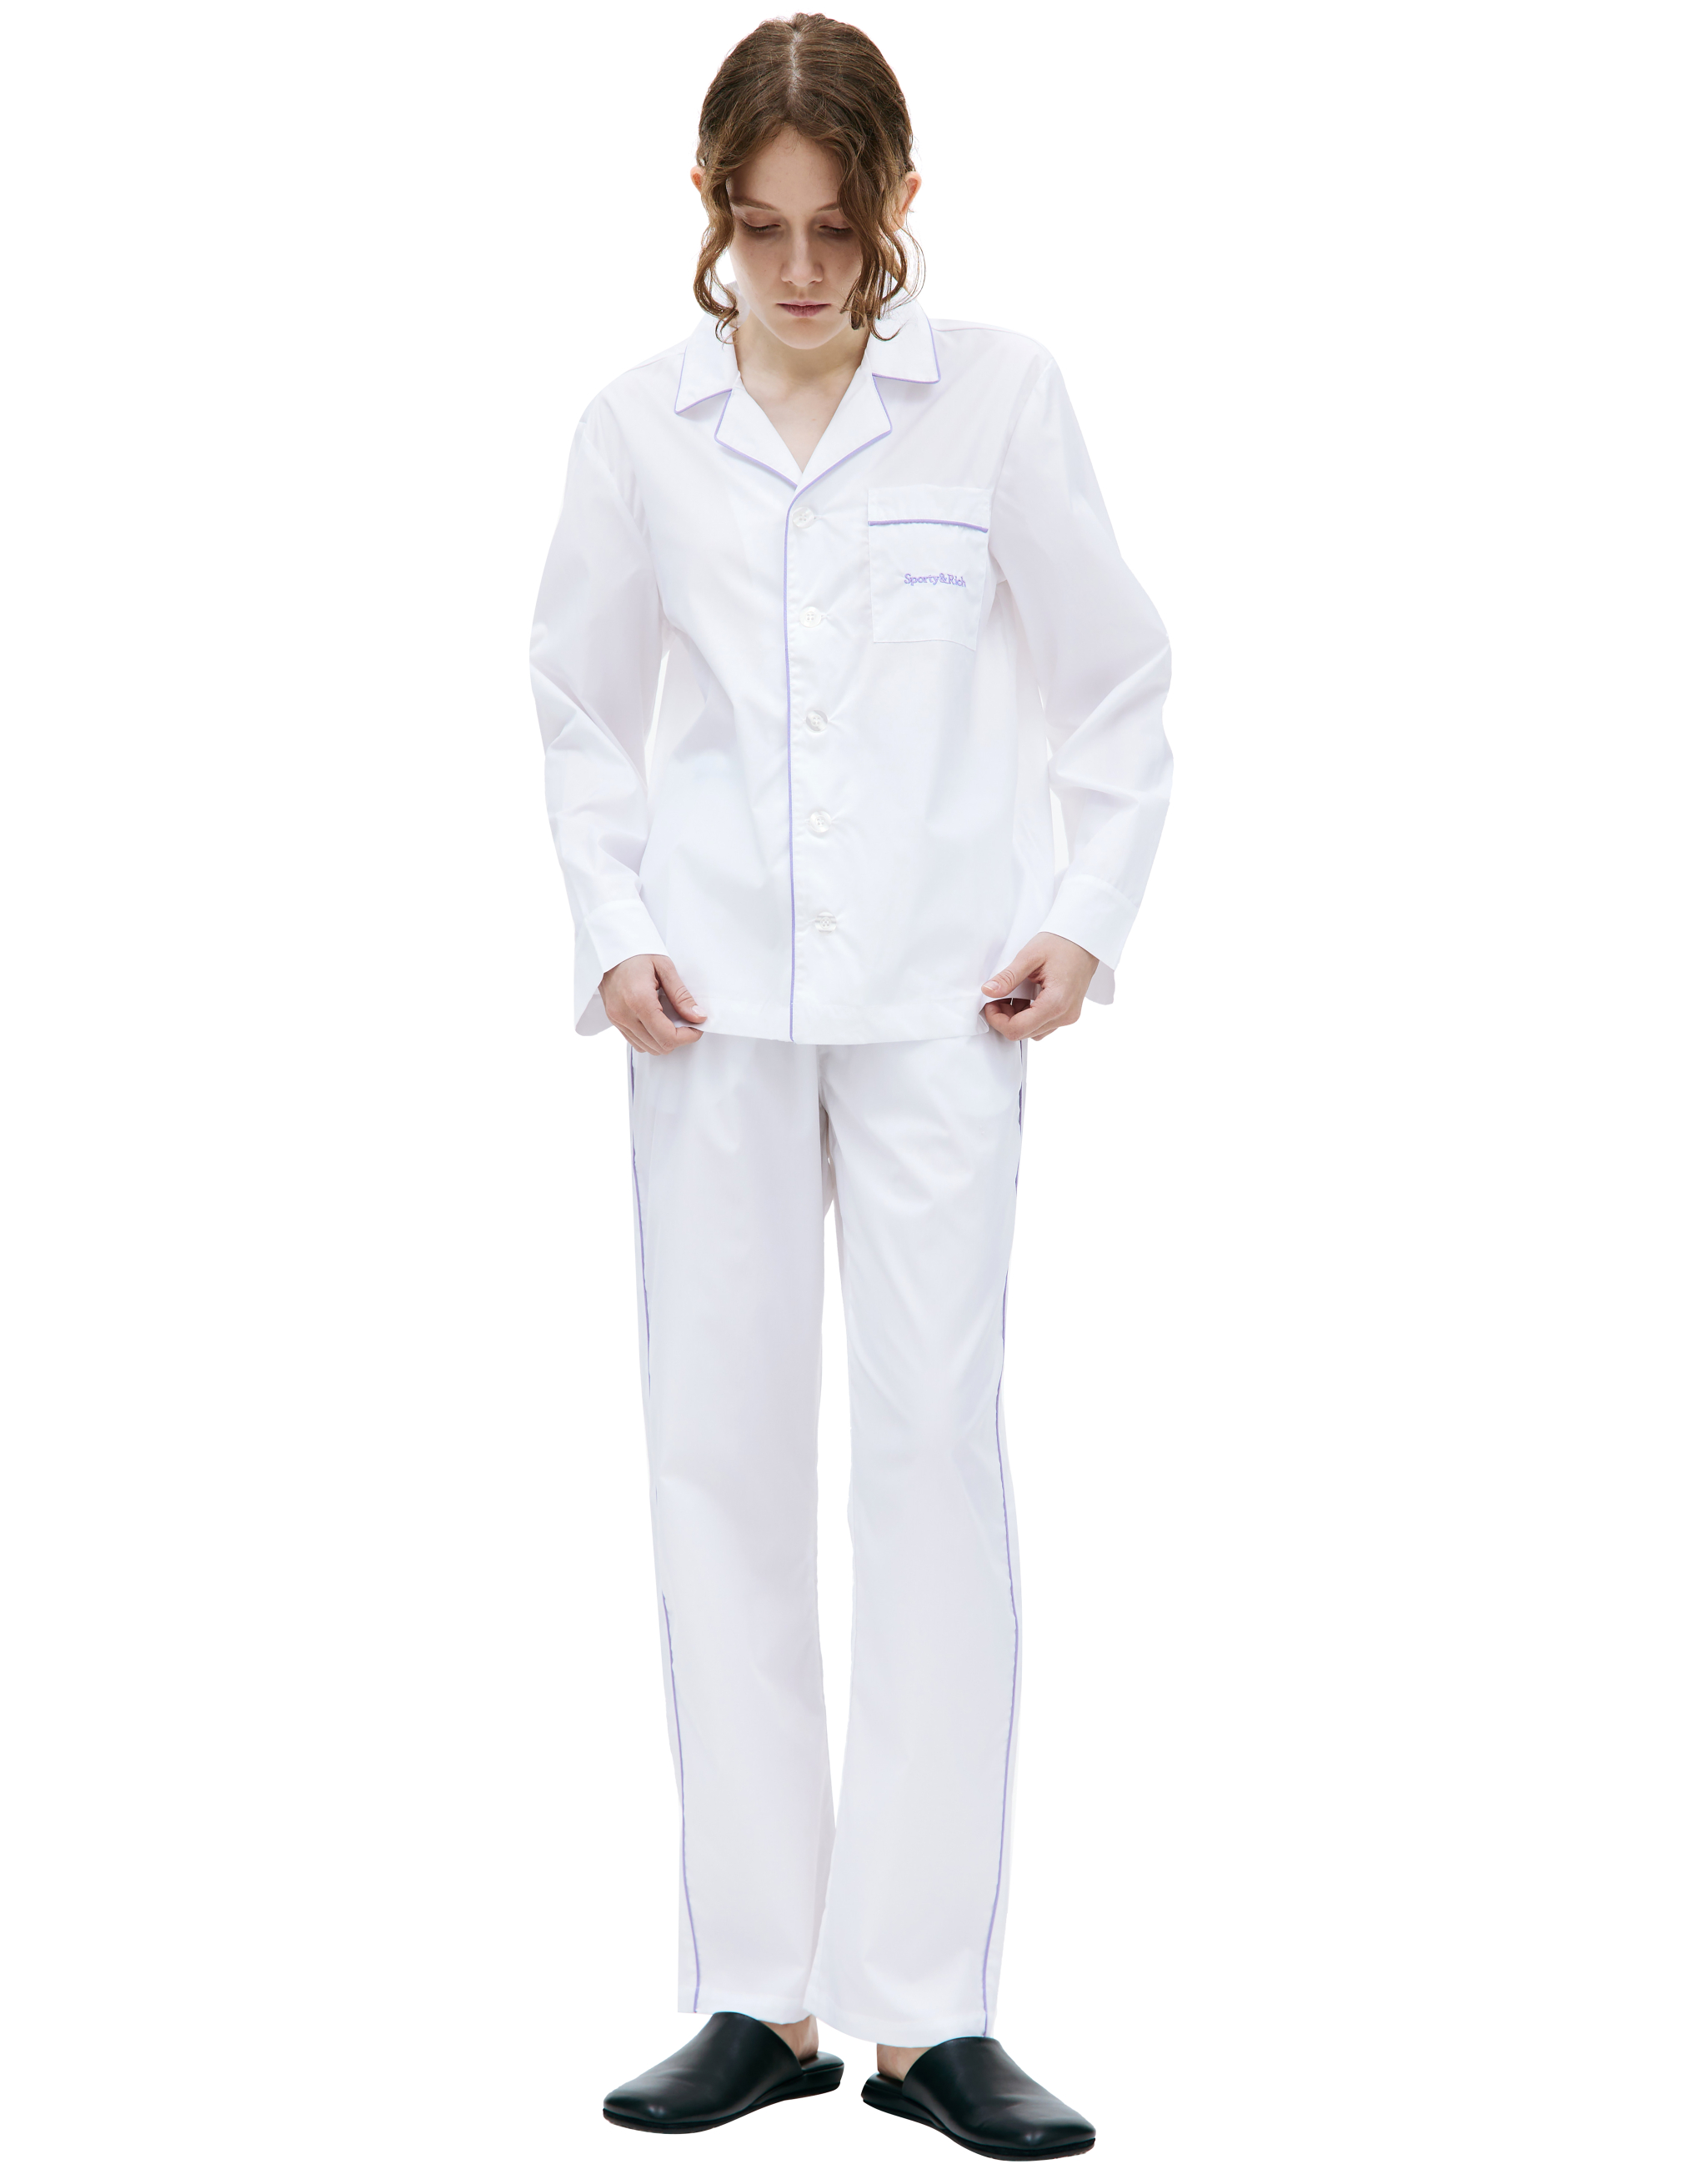 Пижамная рубашка Serif SPORTY & RICH PJ1015WH, размер S;M;L;XL - фото 1